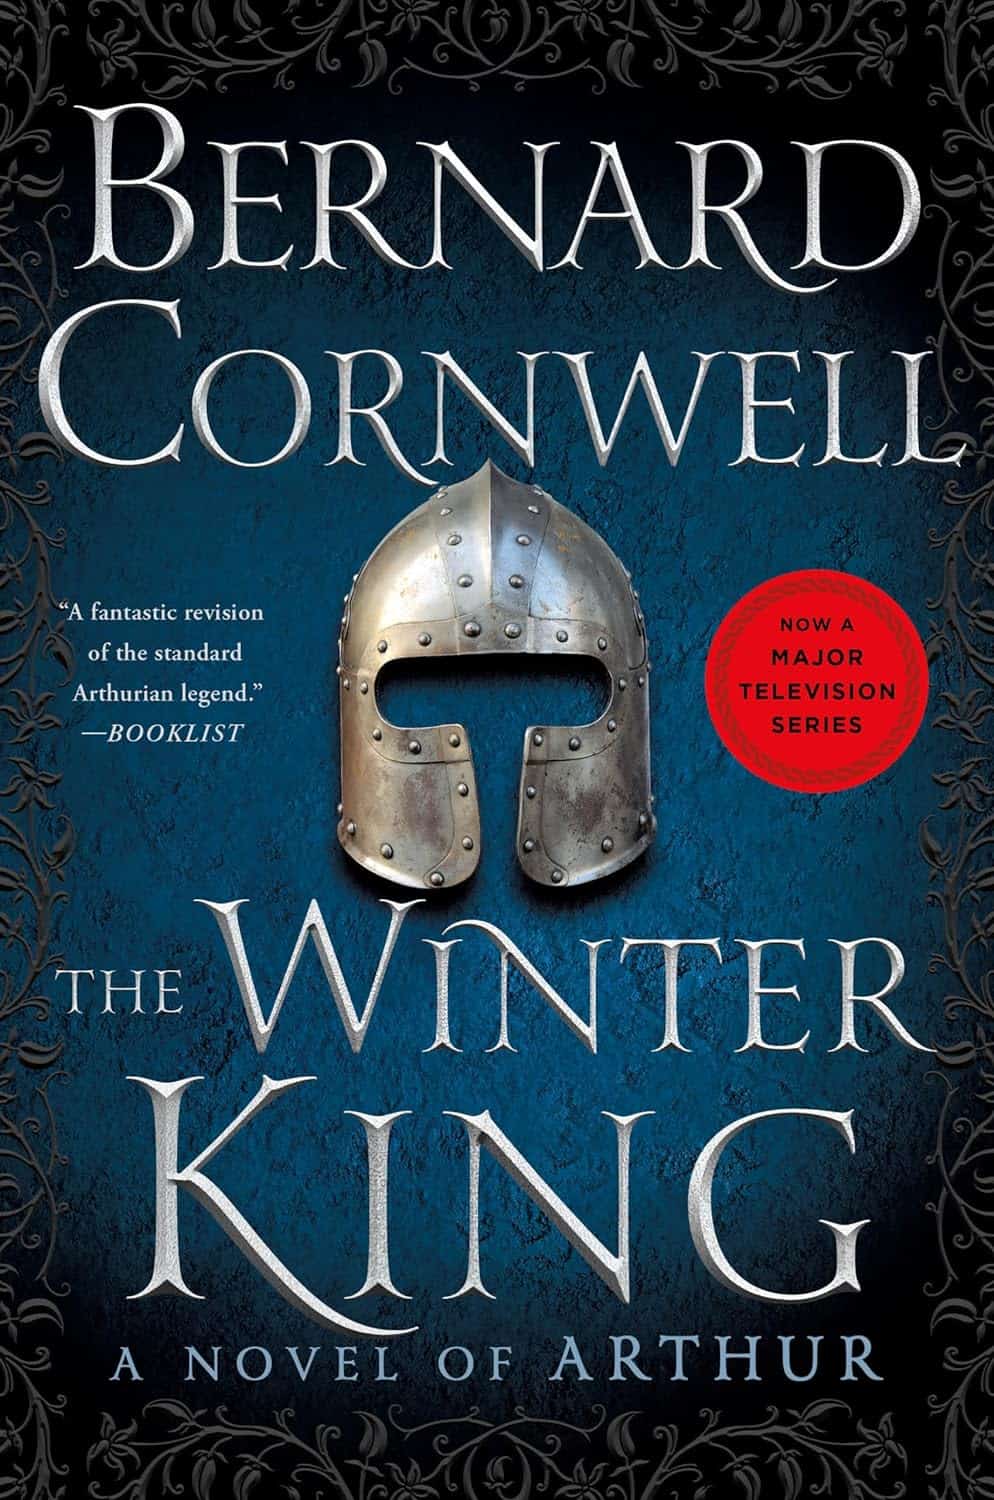 The Winter King by Bernard Cornwell